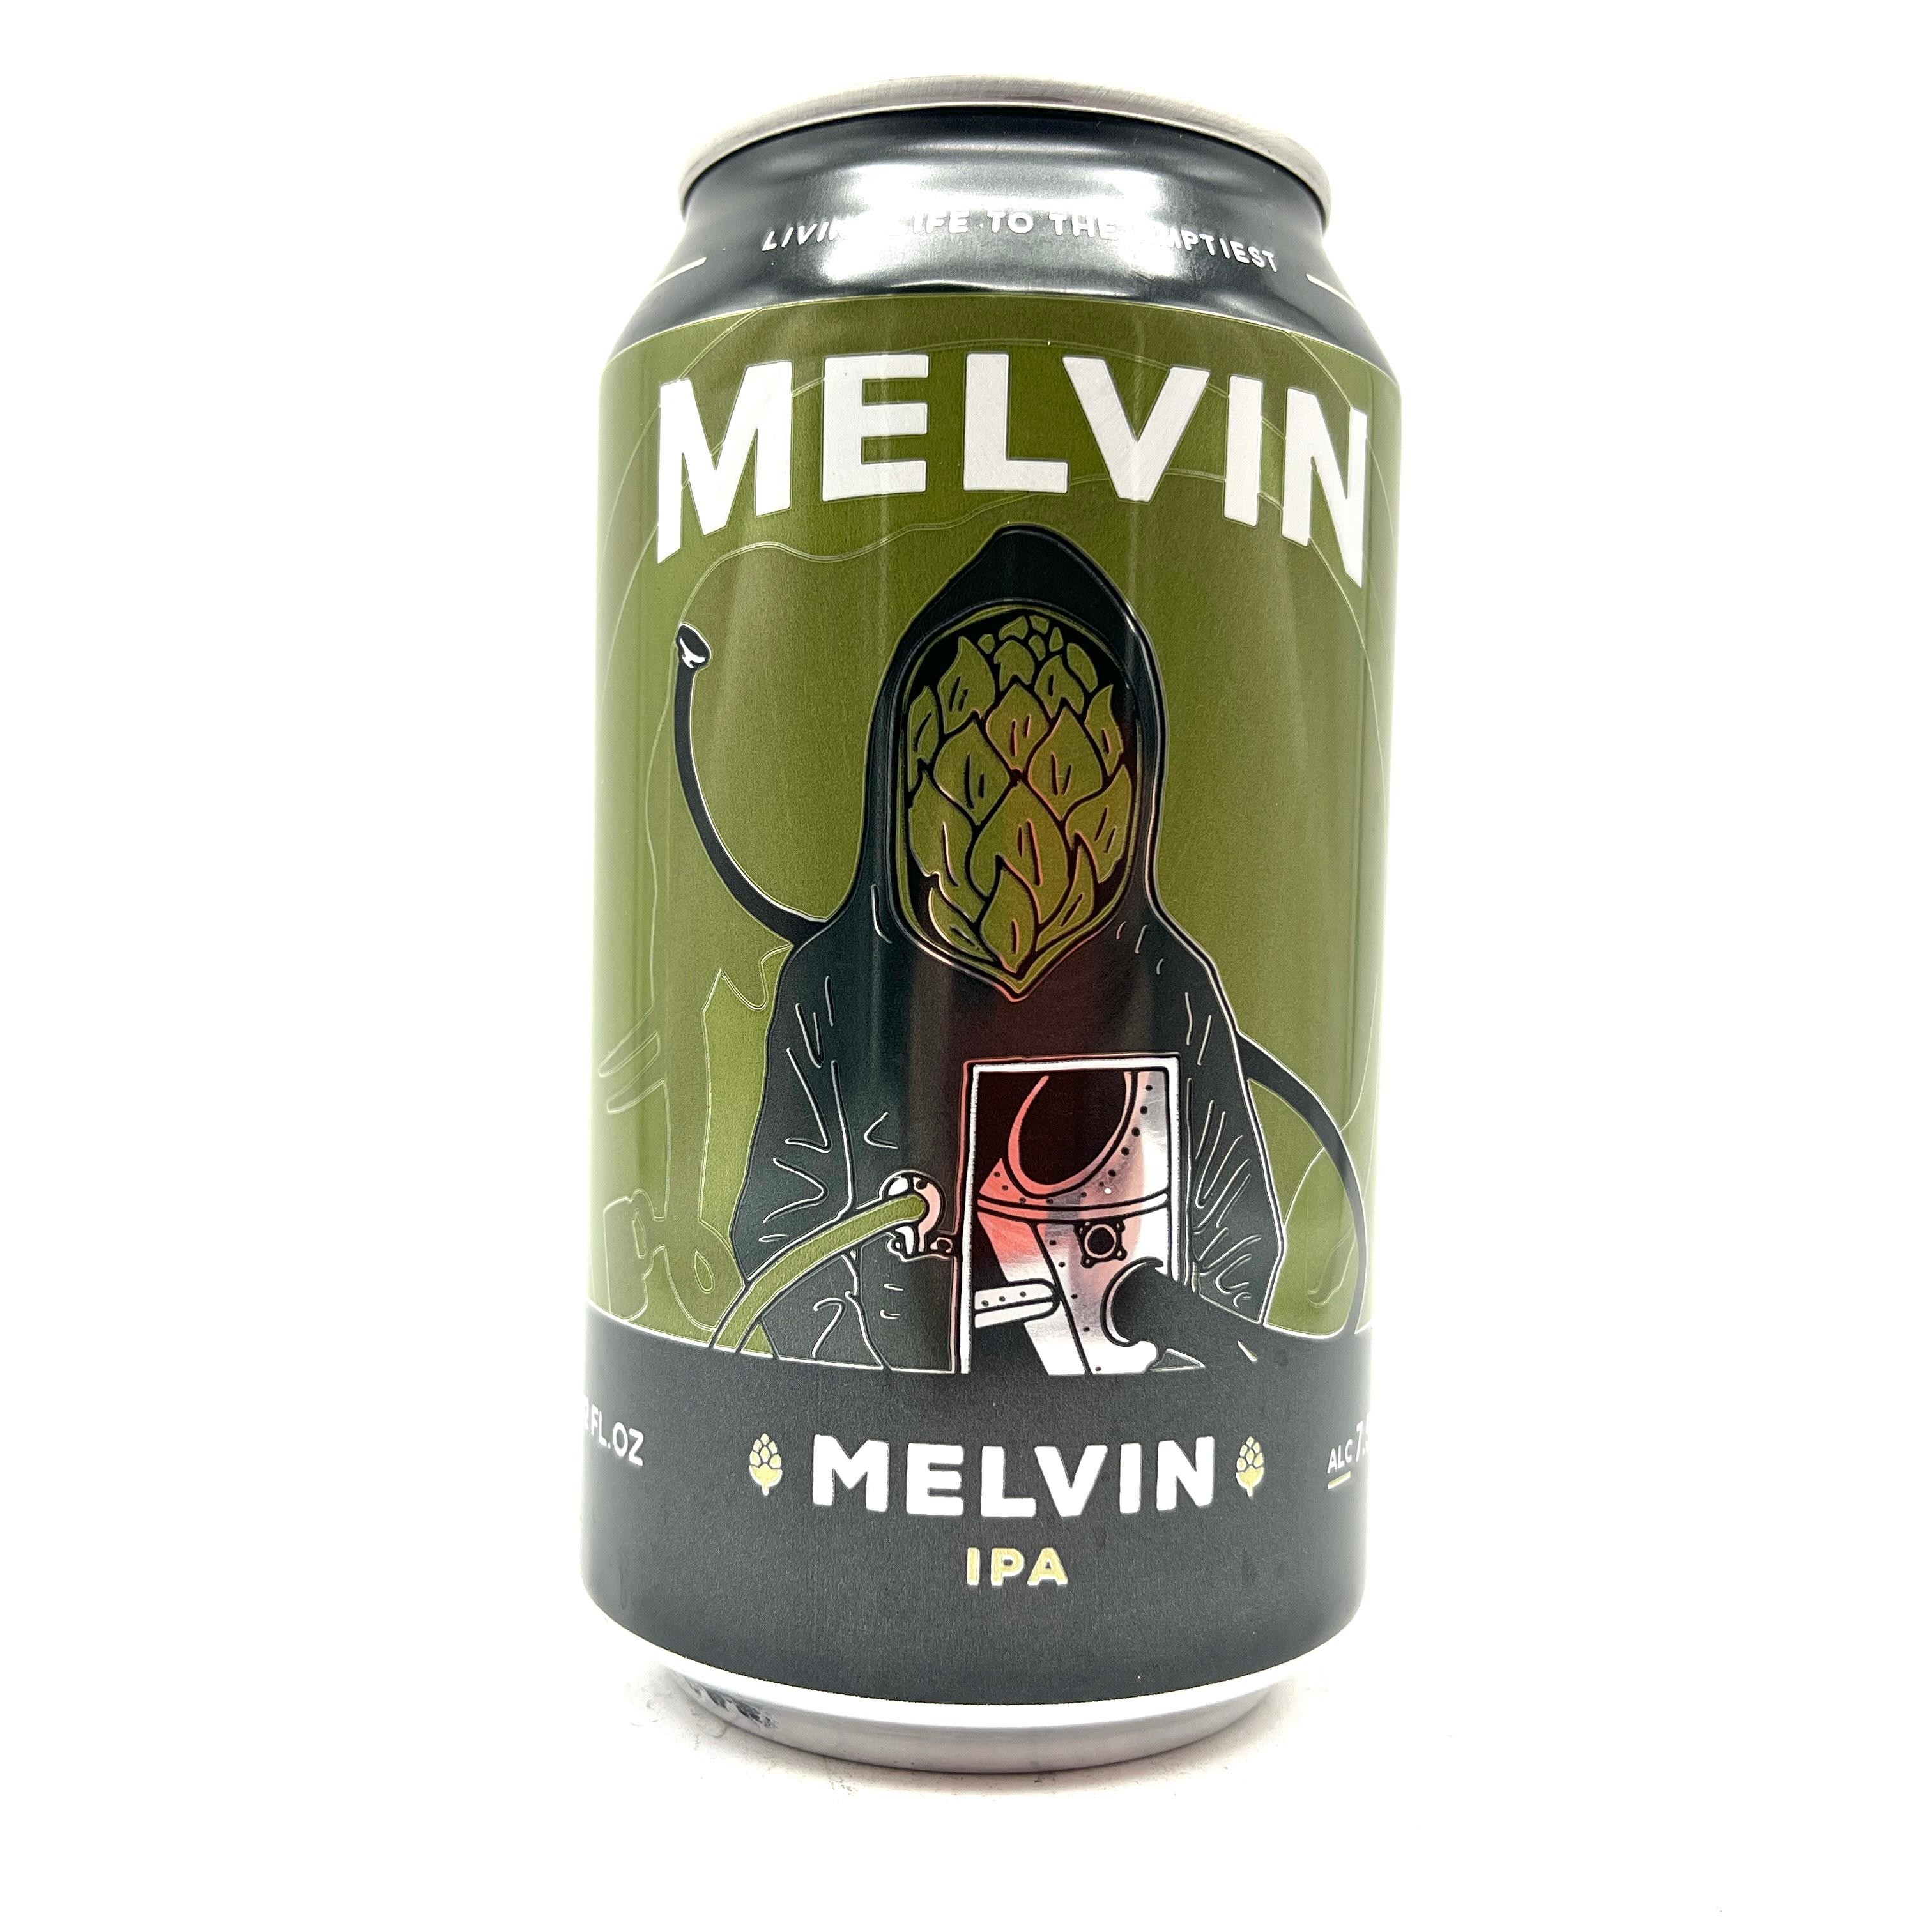 Melvin - Melvin IPA